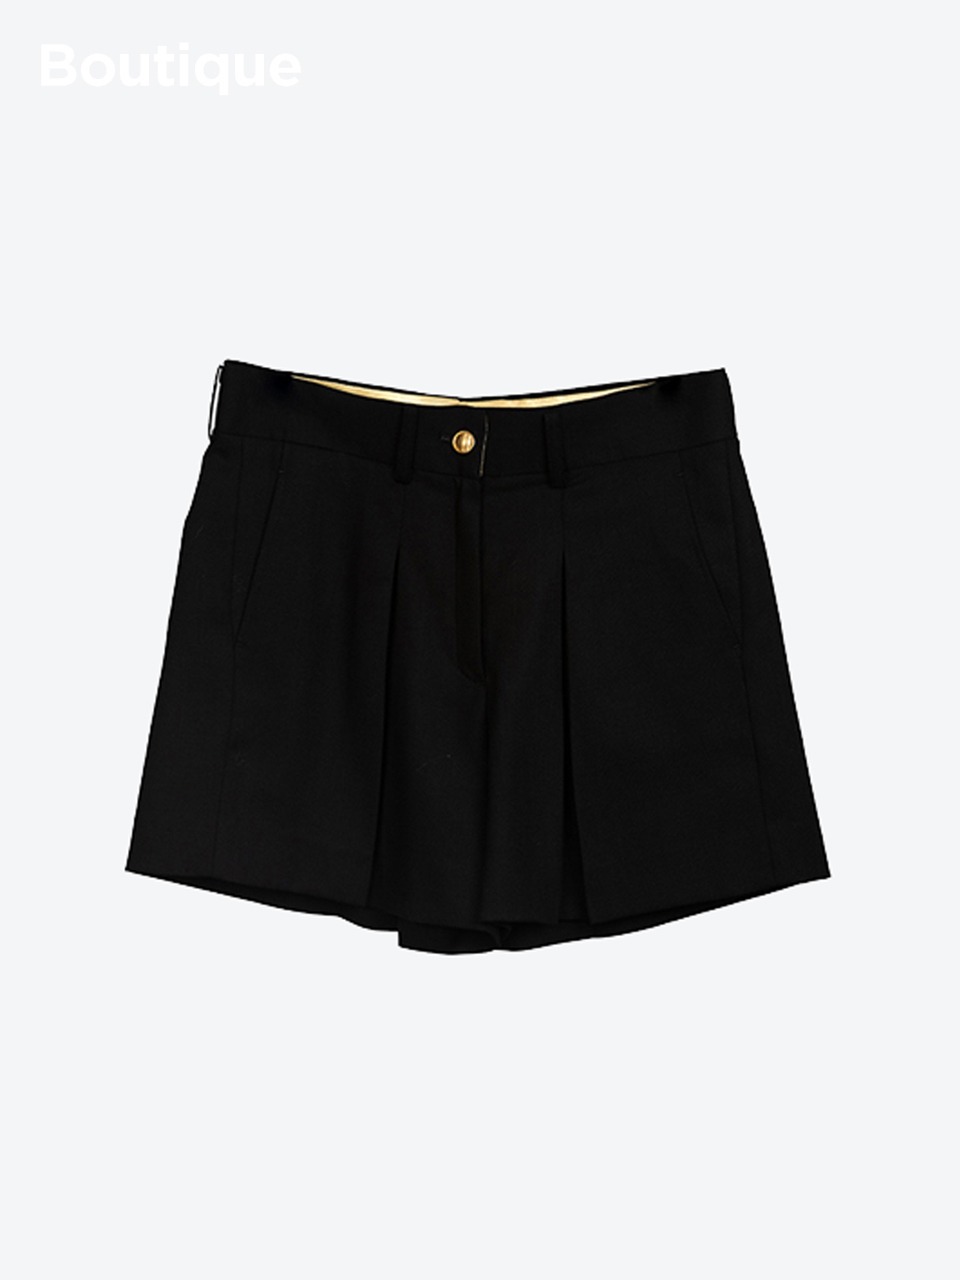 Inverted Box Pleats Shorts (black)